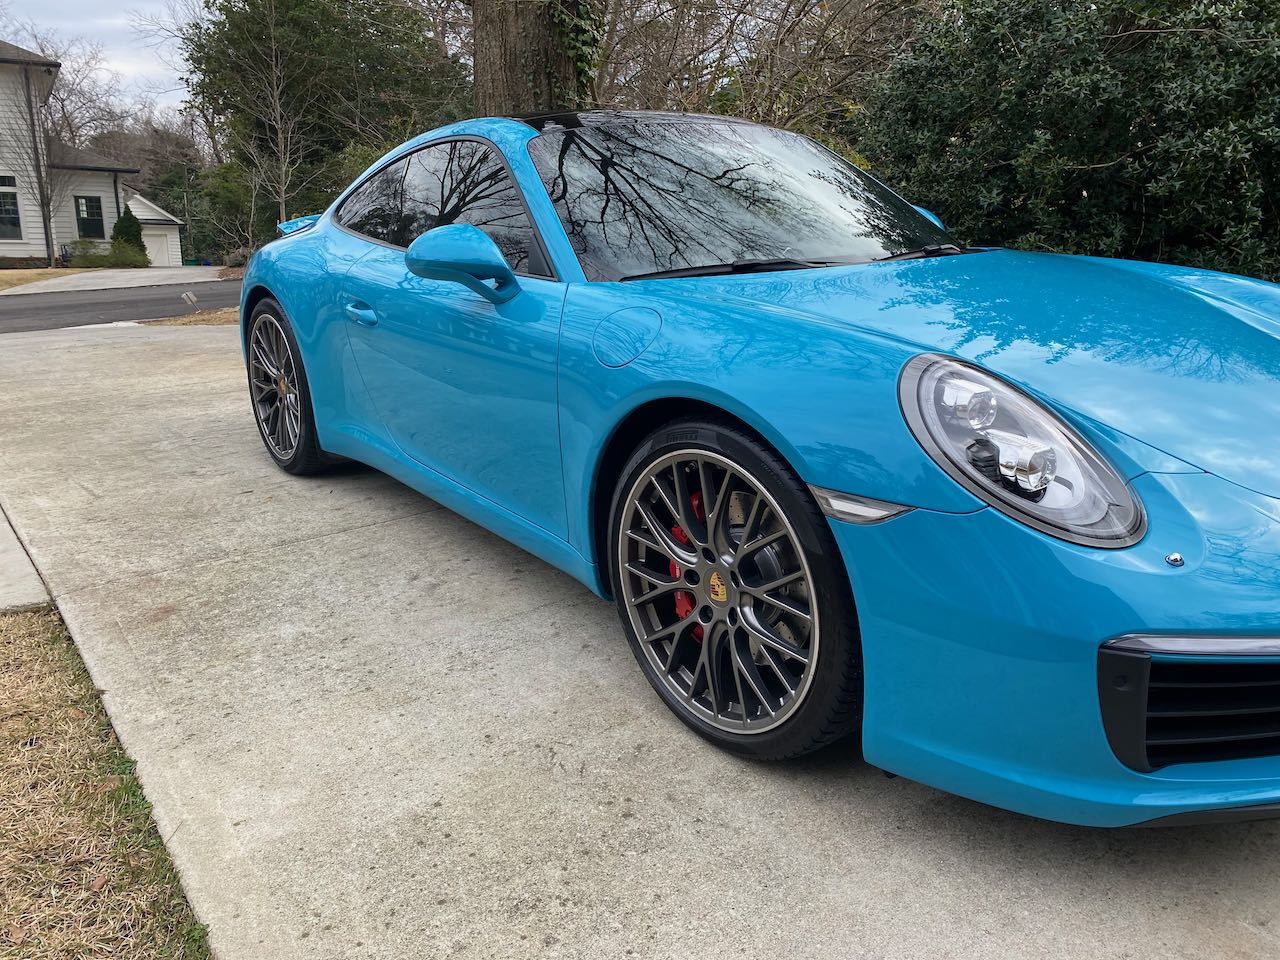 new to me - miami blue 991.2 c2s - Rennlist - Porsche Discussion Forums